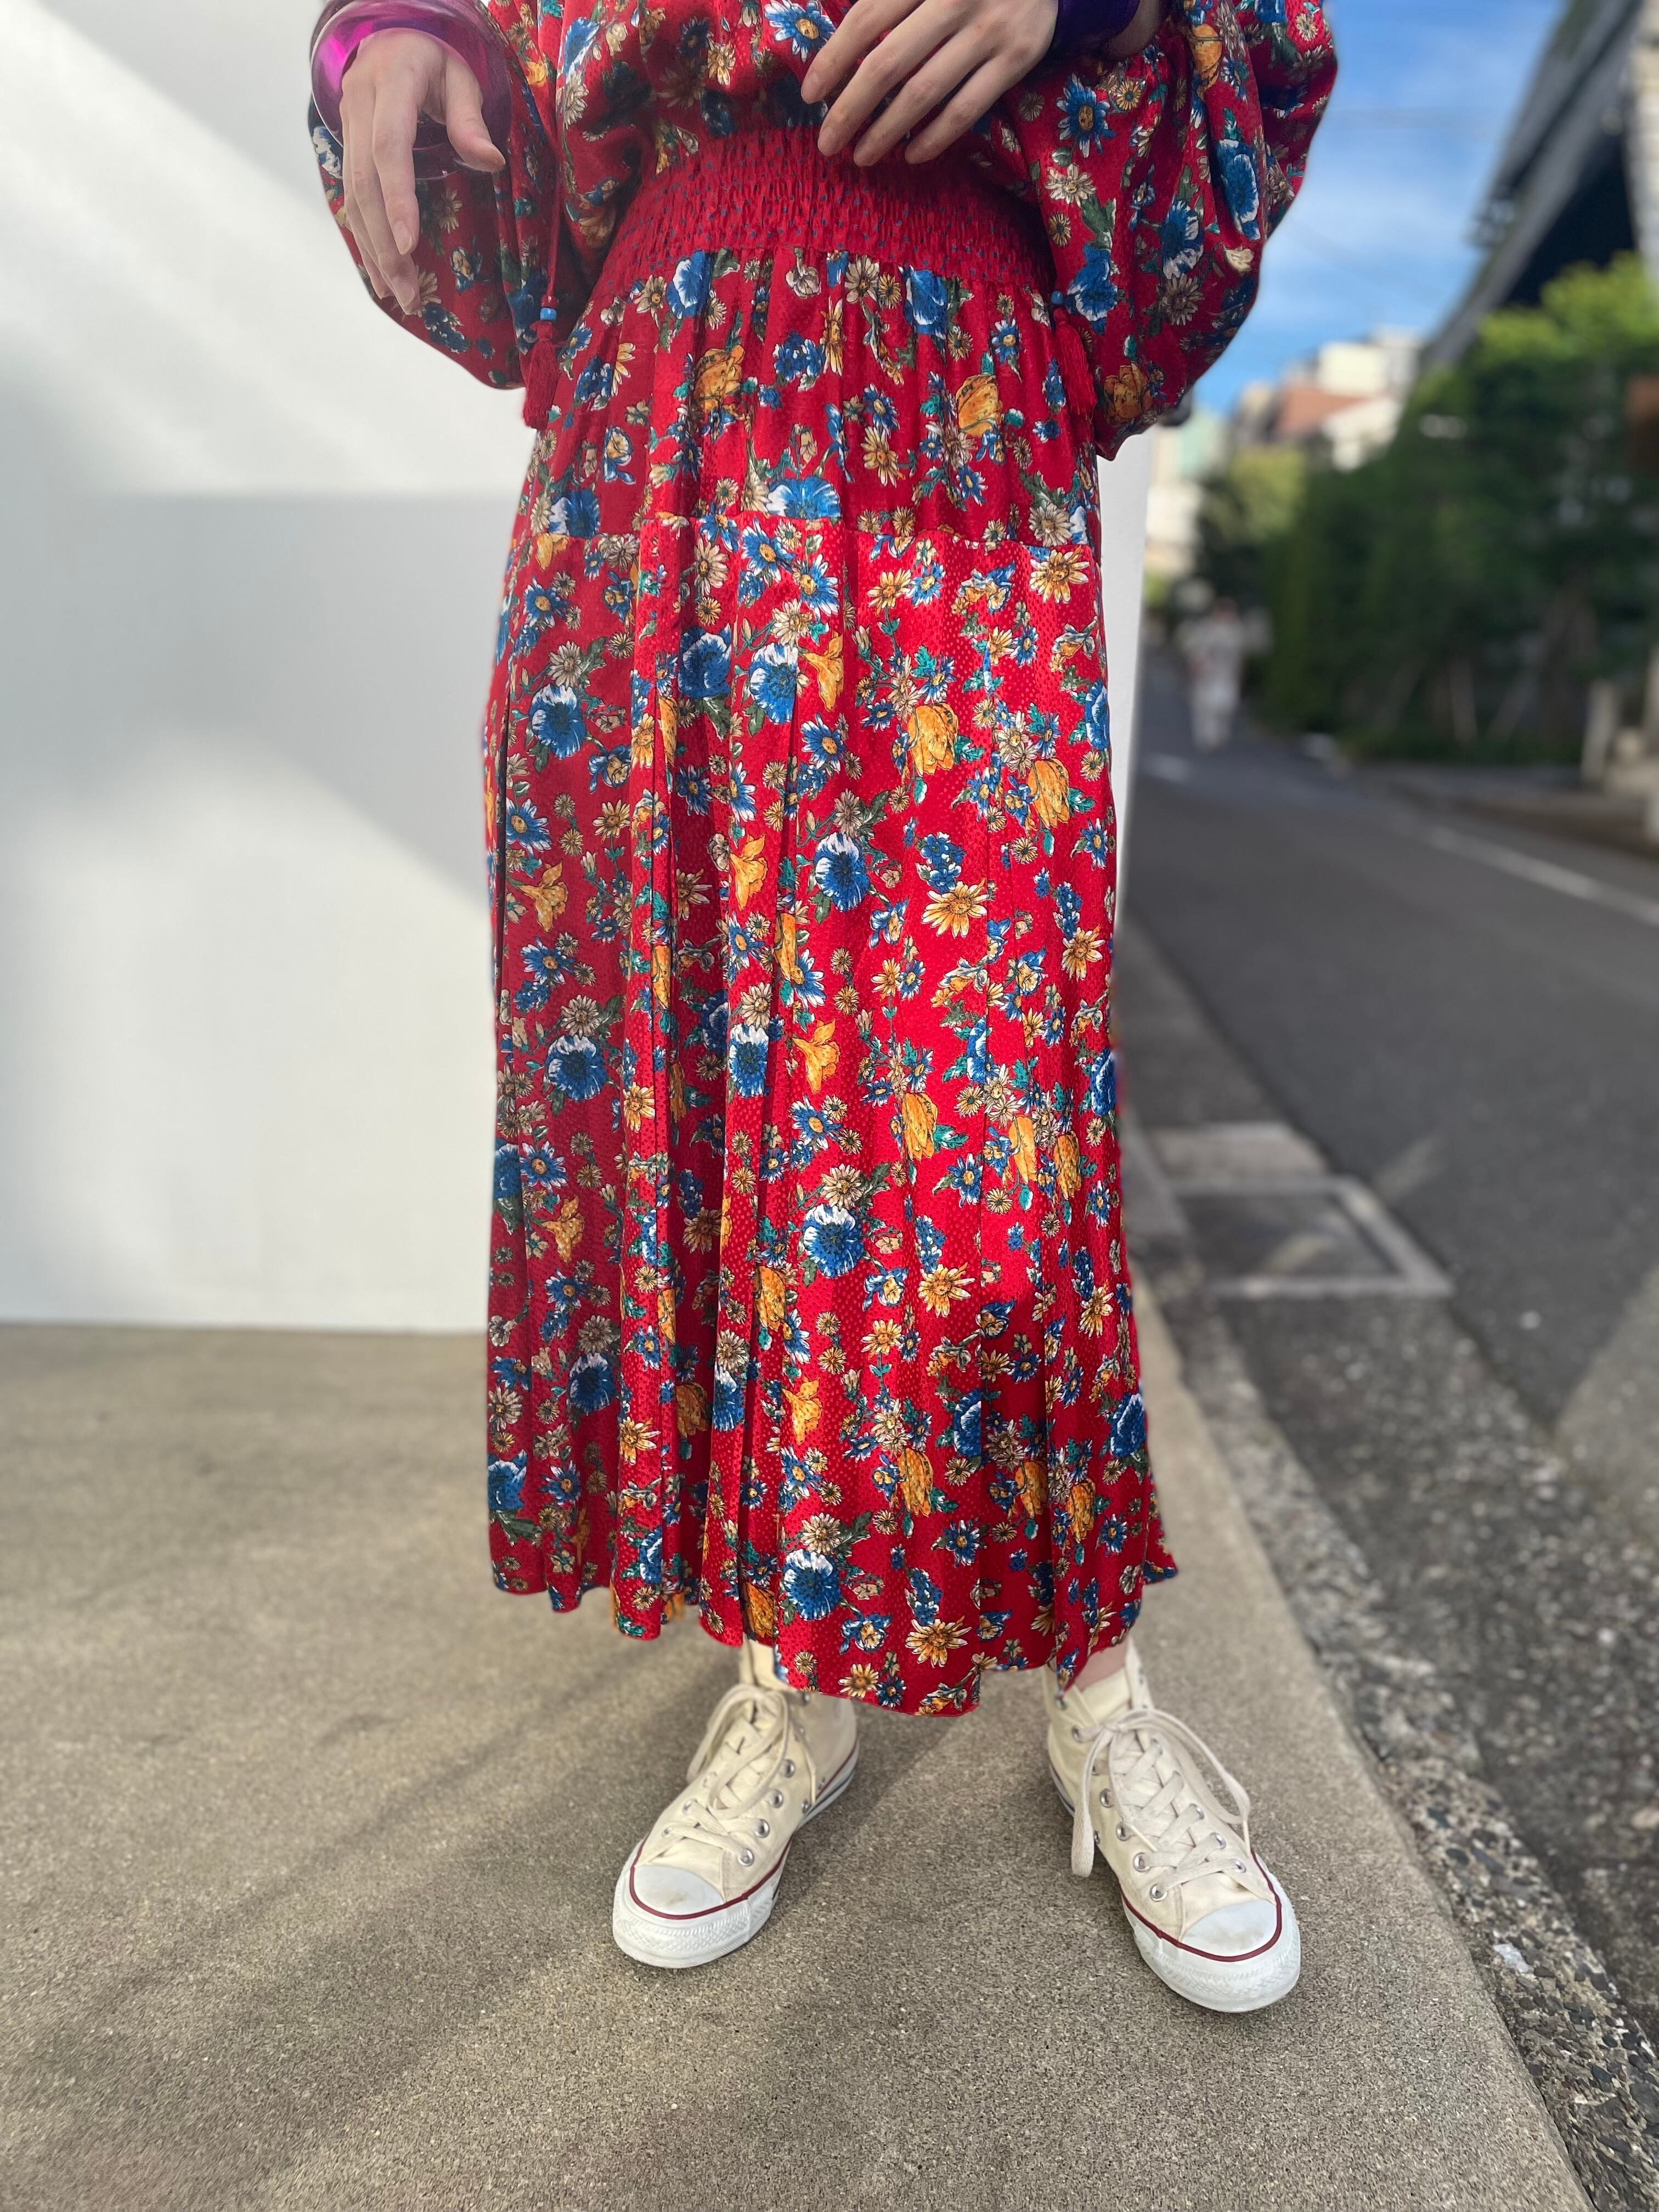 Diane freis red × floral cache-coeur dress ( ダイアン フレイス レッド × 花柄 カシュクール  ワンピース ) | Riyad vintage shop powered by BASE